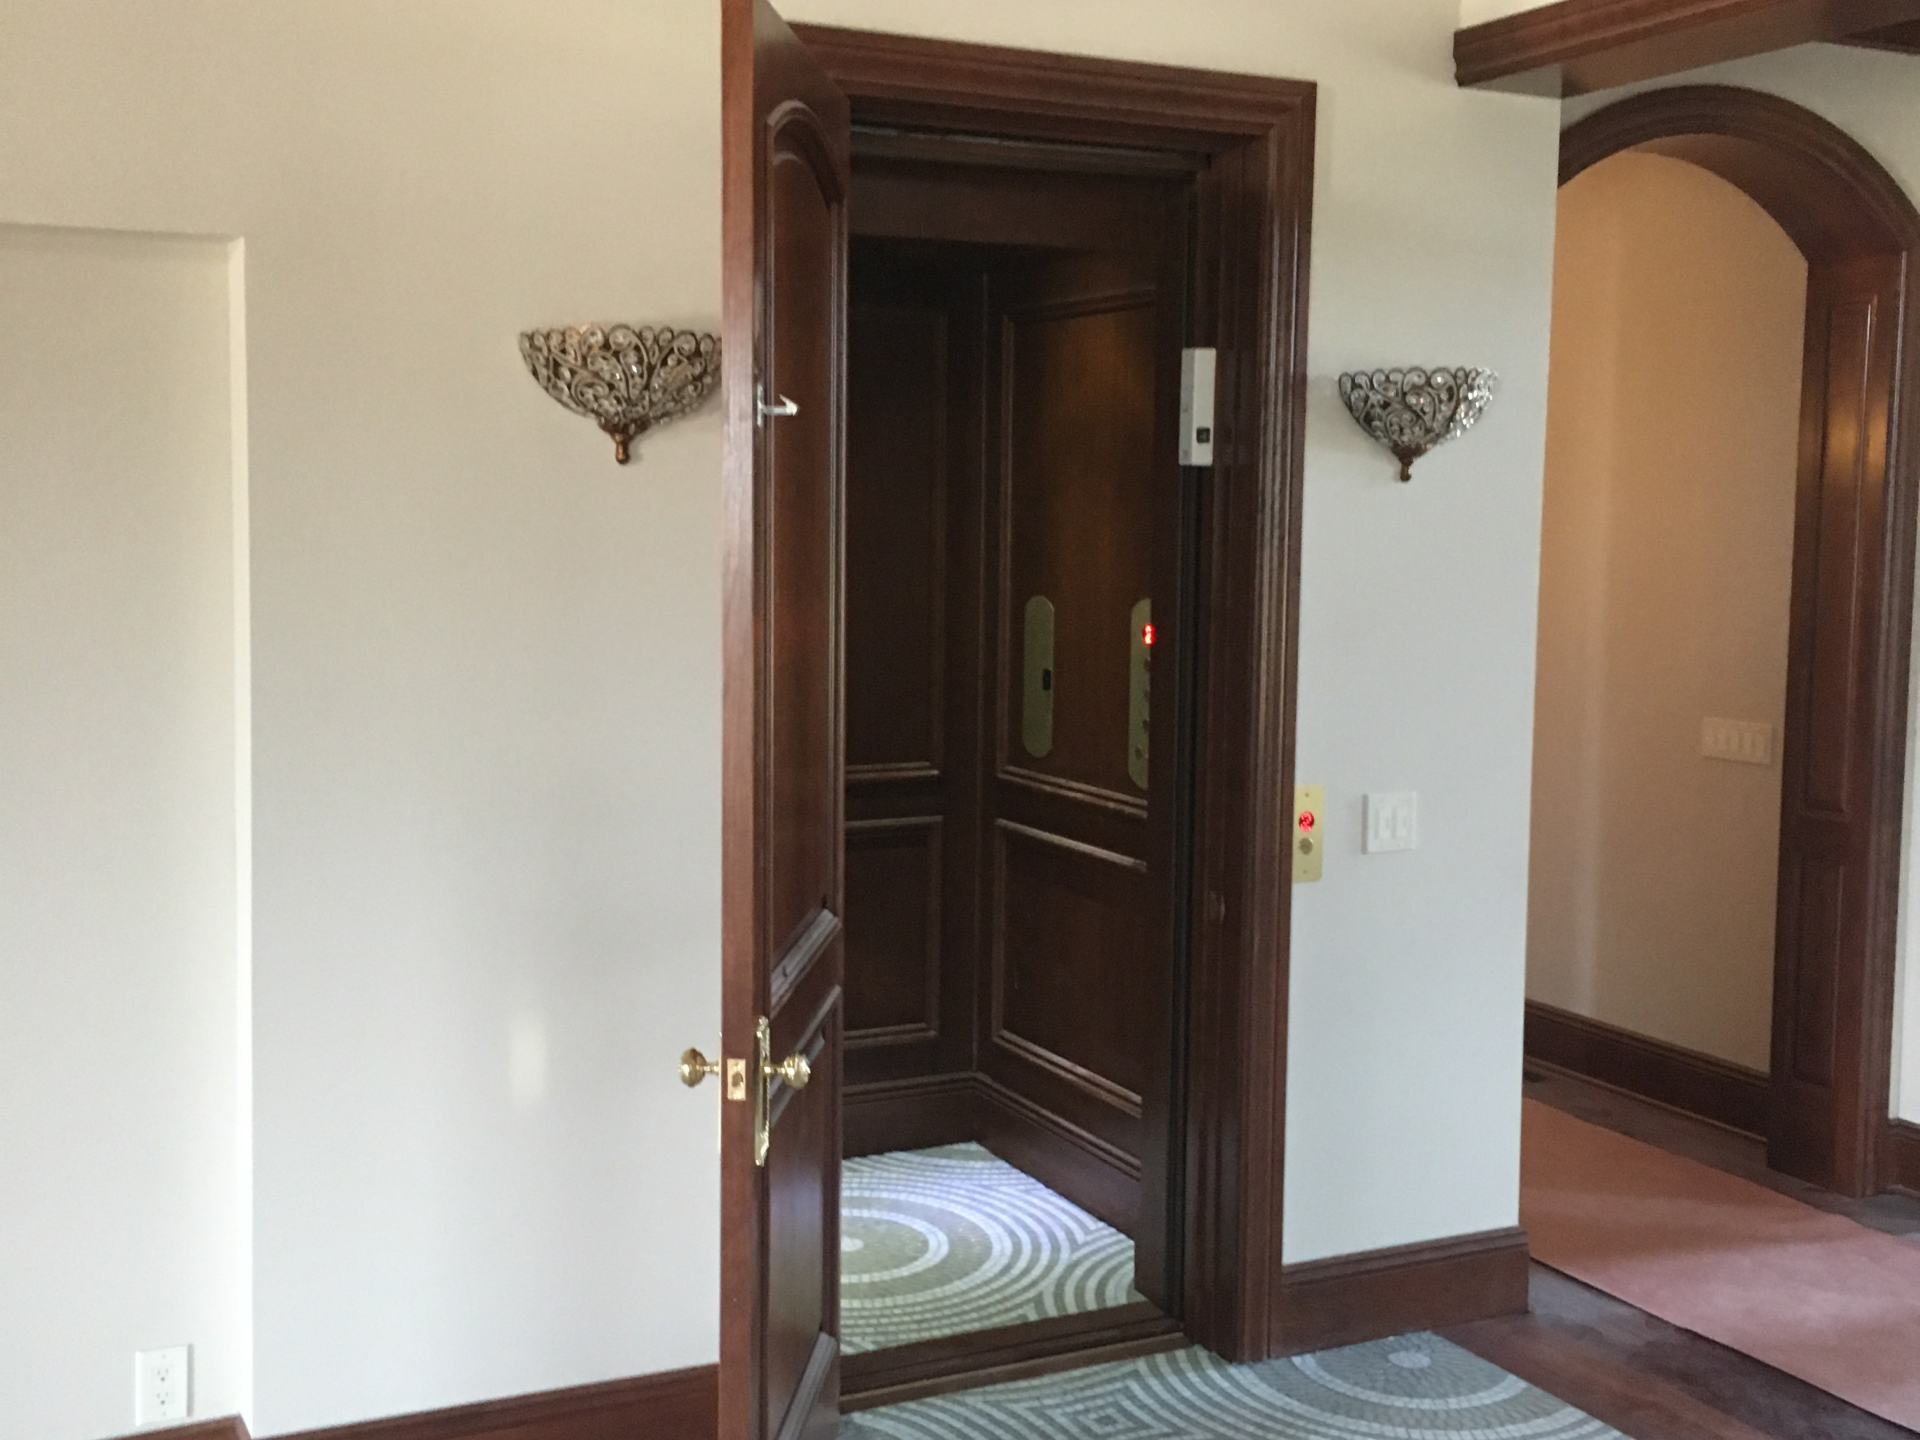 Home Elevator with dark wood - Arrow Lift 2020